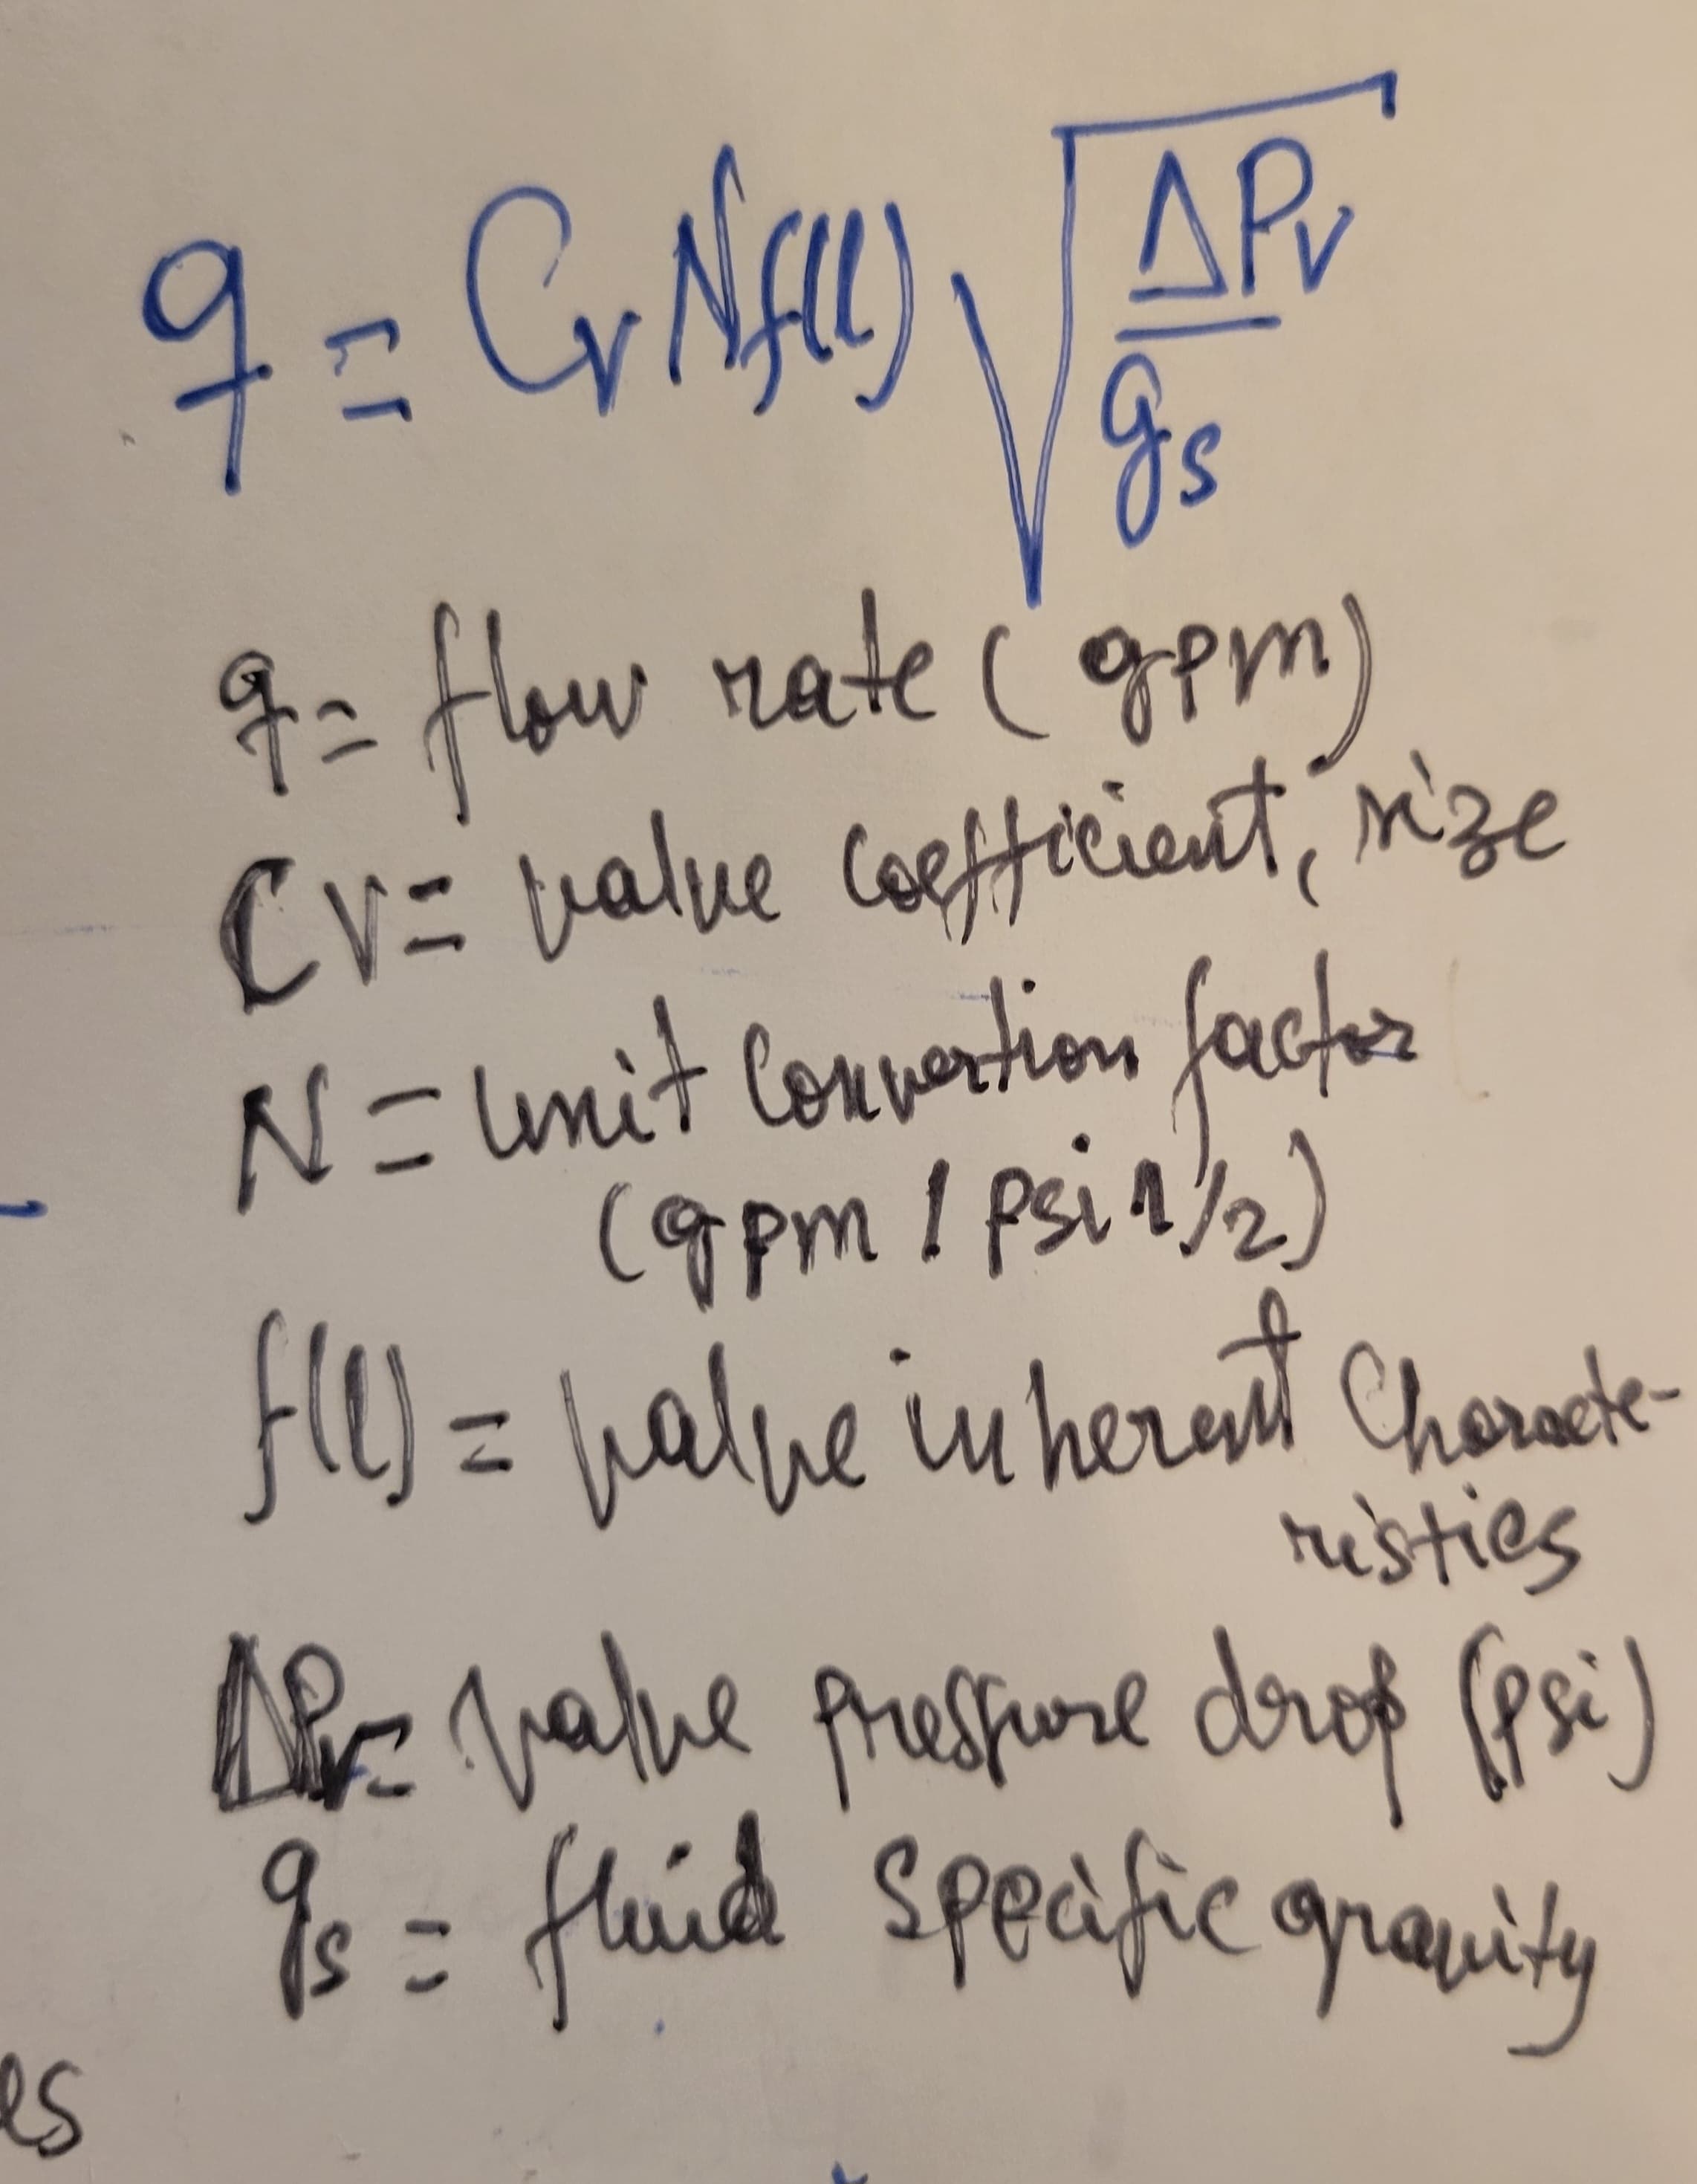 es
9 = Cv NfU) APv
gs
9 = flow rate (gpm)
CV = value coefficient, rize
N = unit convertion factor
(9pm Ipsin)/2)
1
f(l) = walve inherent characte-
risties
A value pressure drop (psi)
gs:
fluid specific gravity